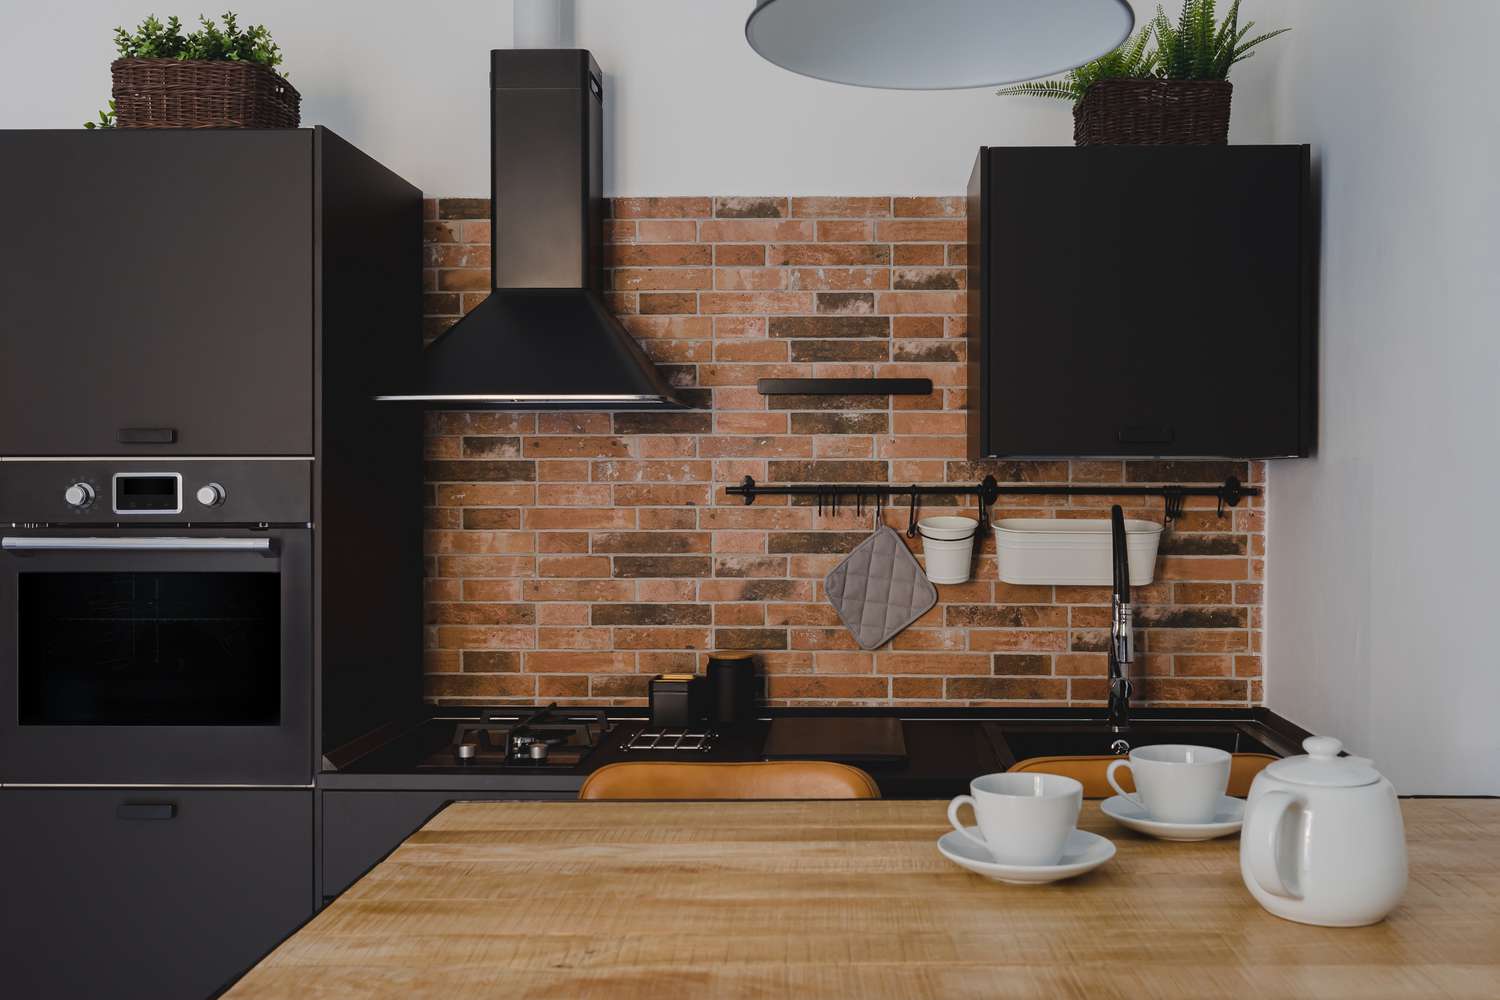 Black stainless steel appliances in brick wall kitchen